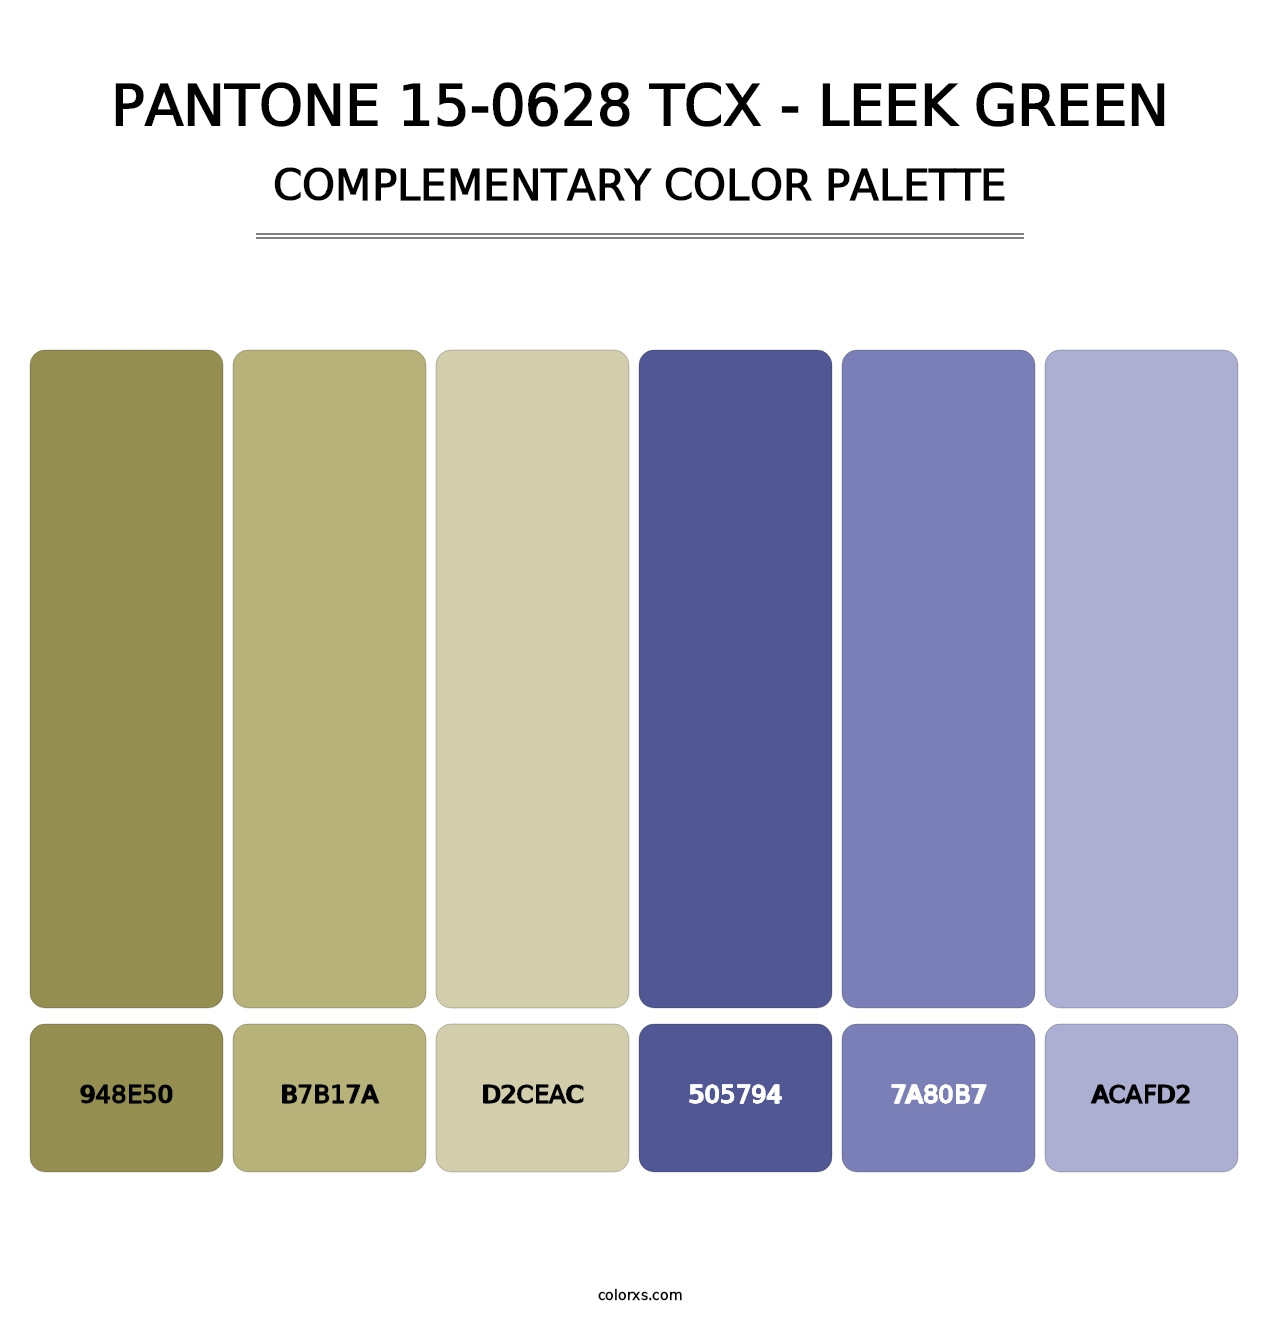 PANTONE 15-0628 TCX - Leek Green - Complementary Color Palette